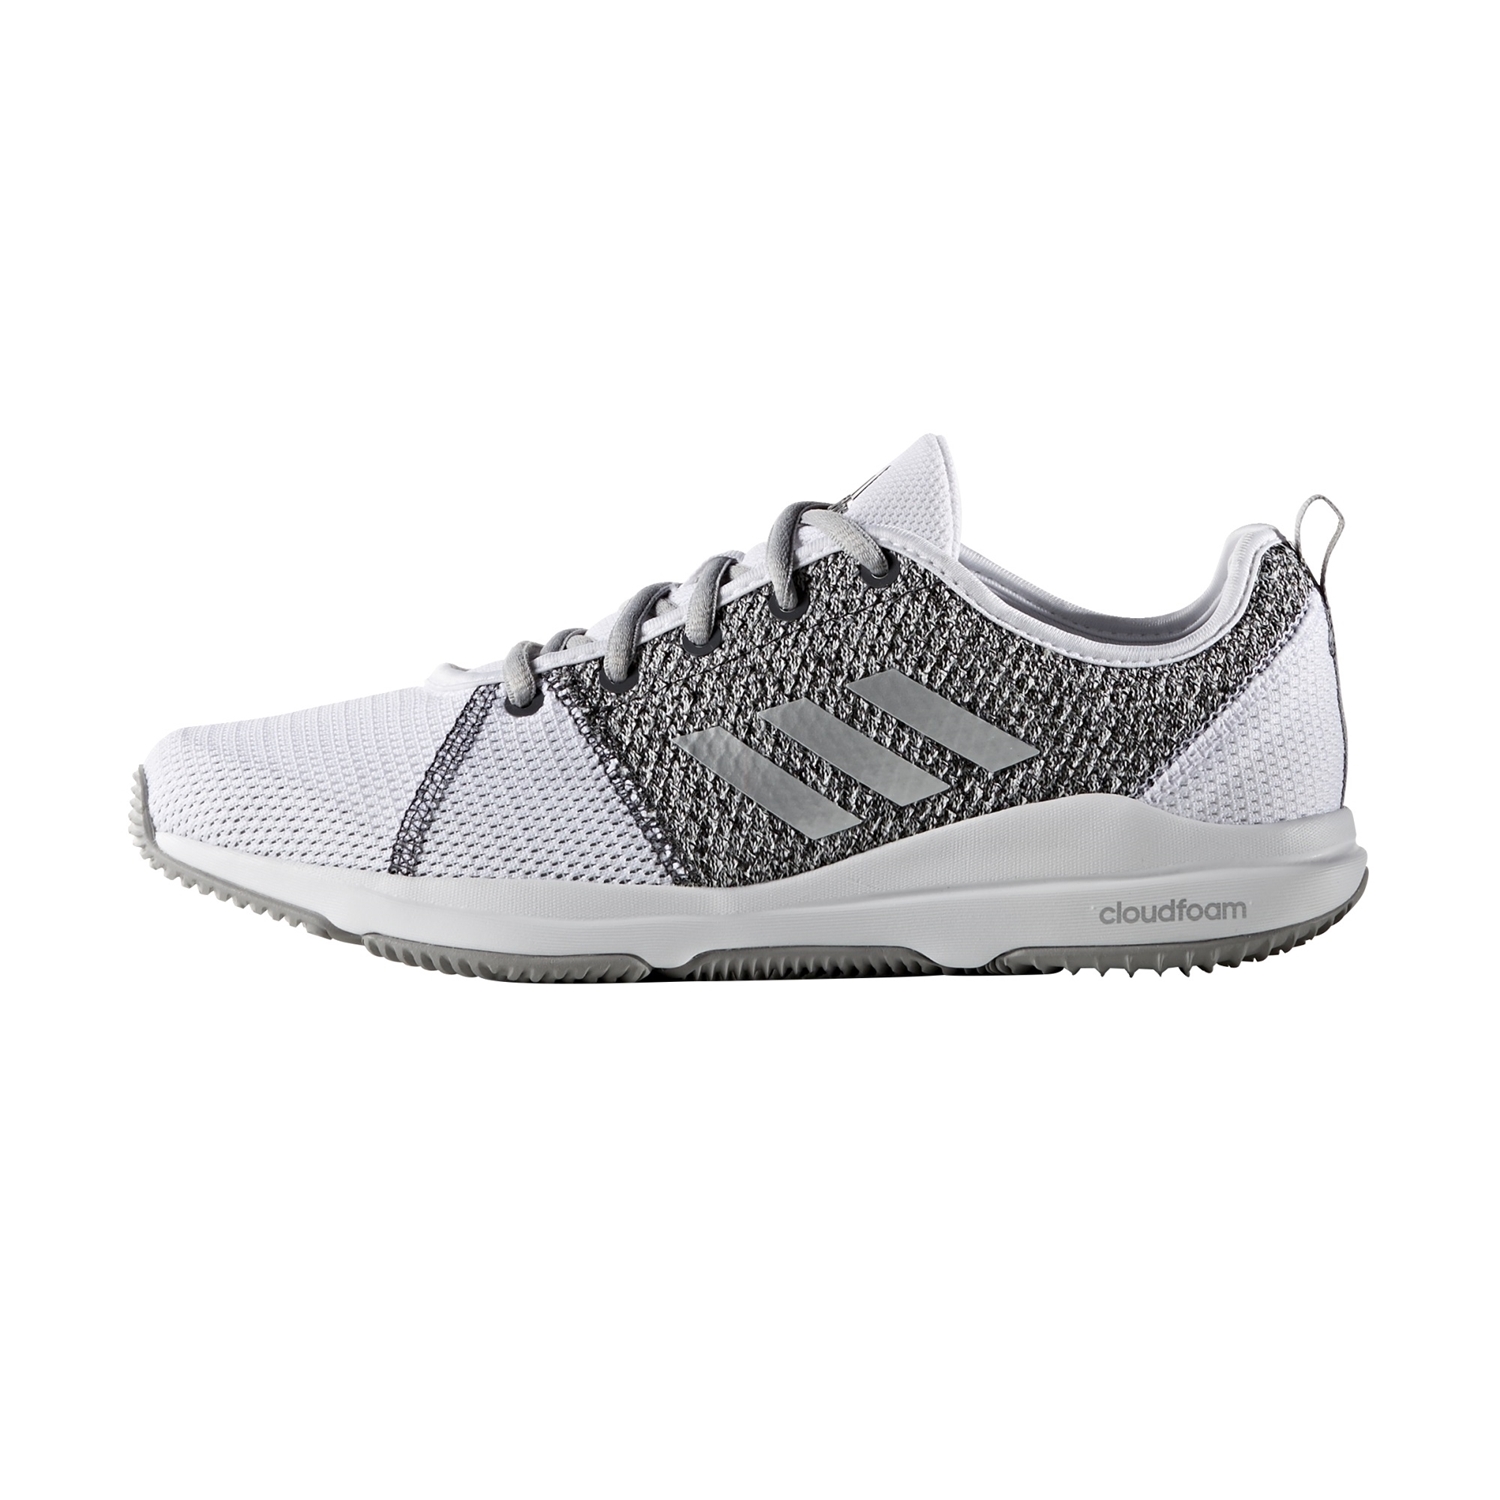 Adidas Training (white/silver/solid grey)